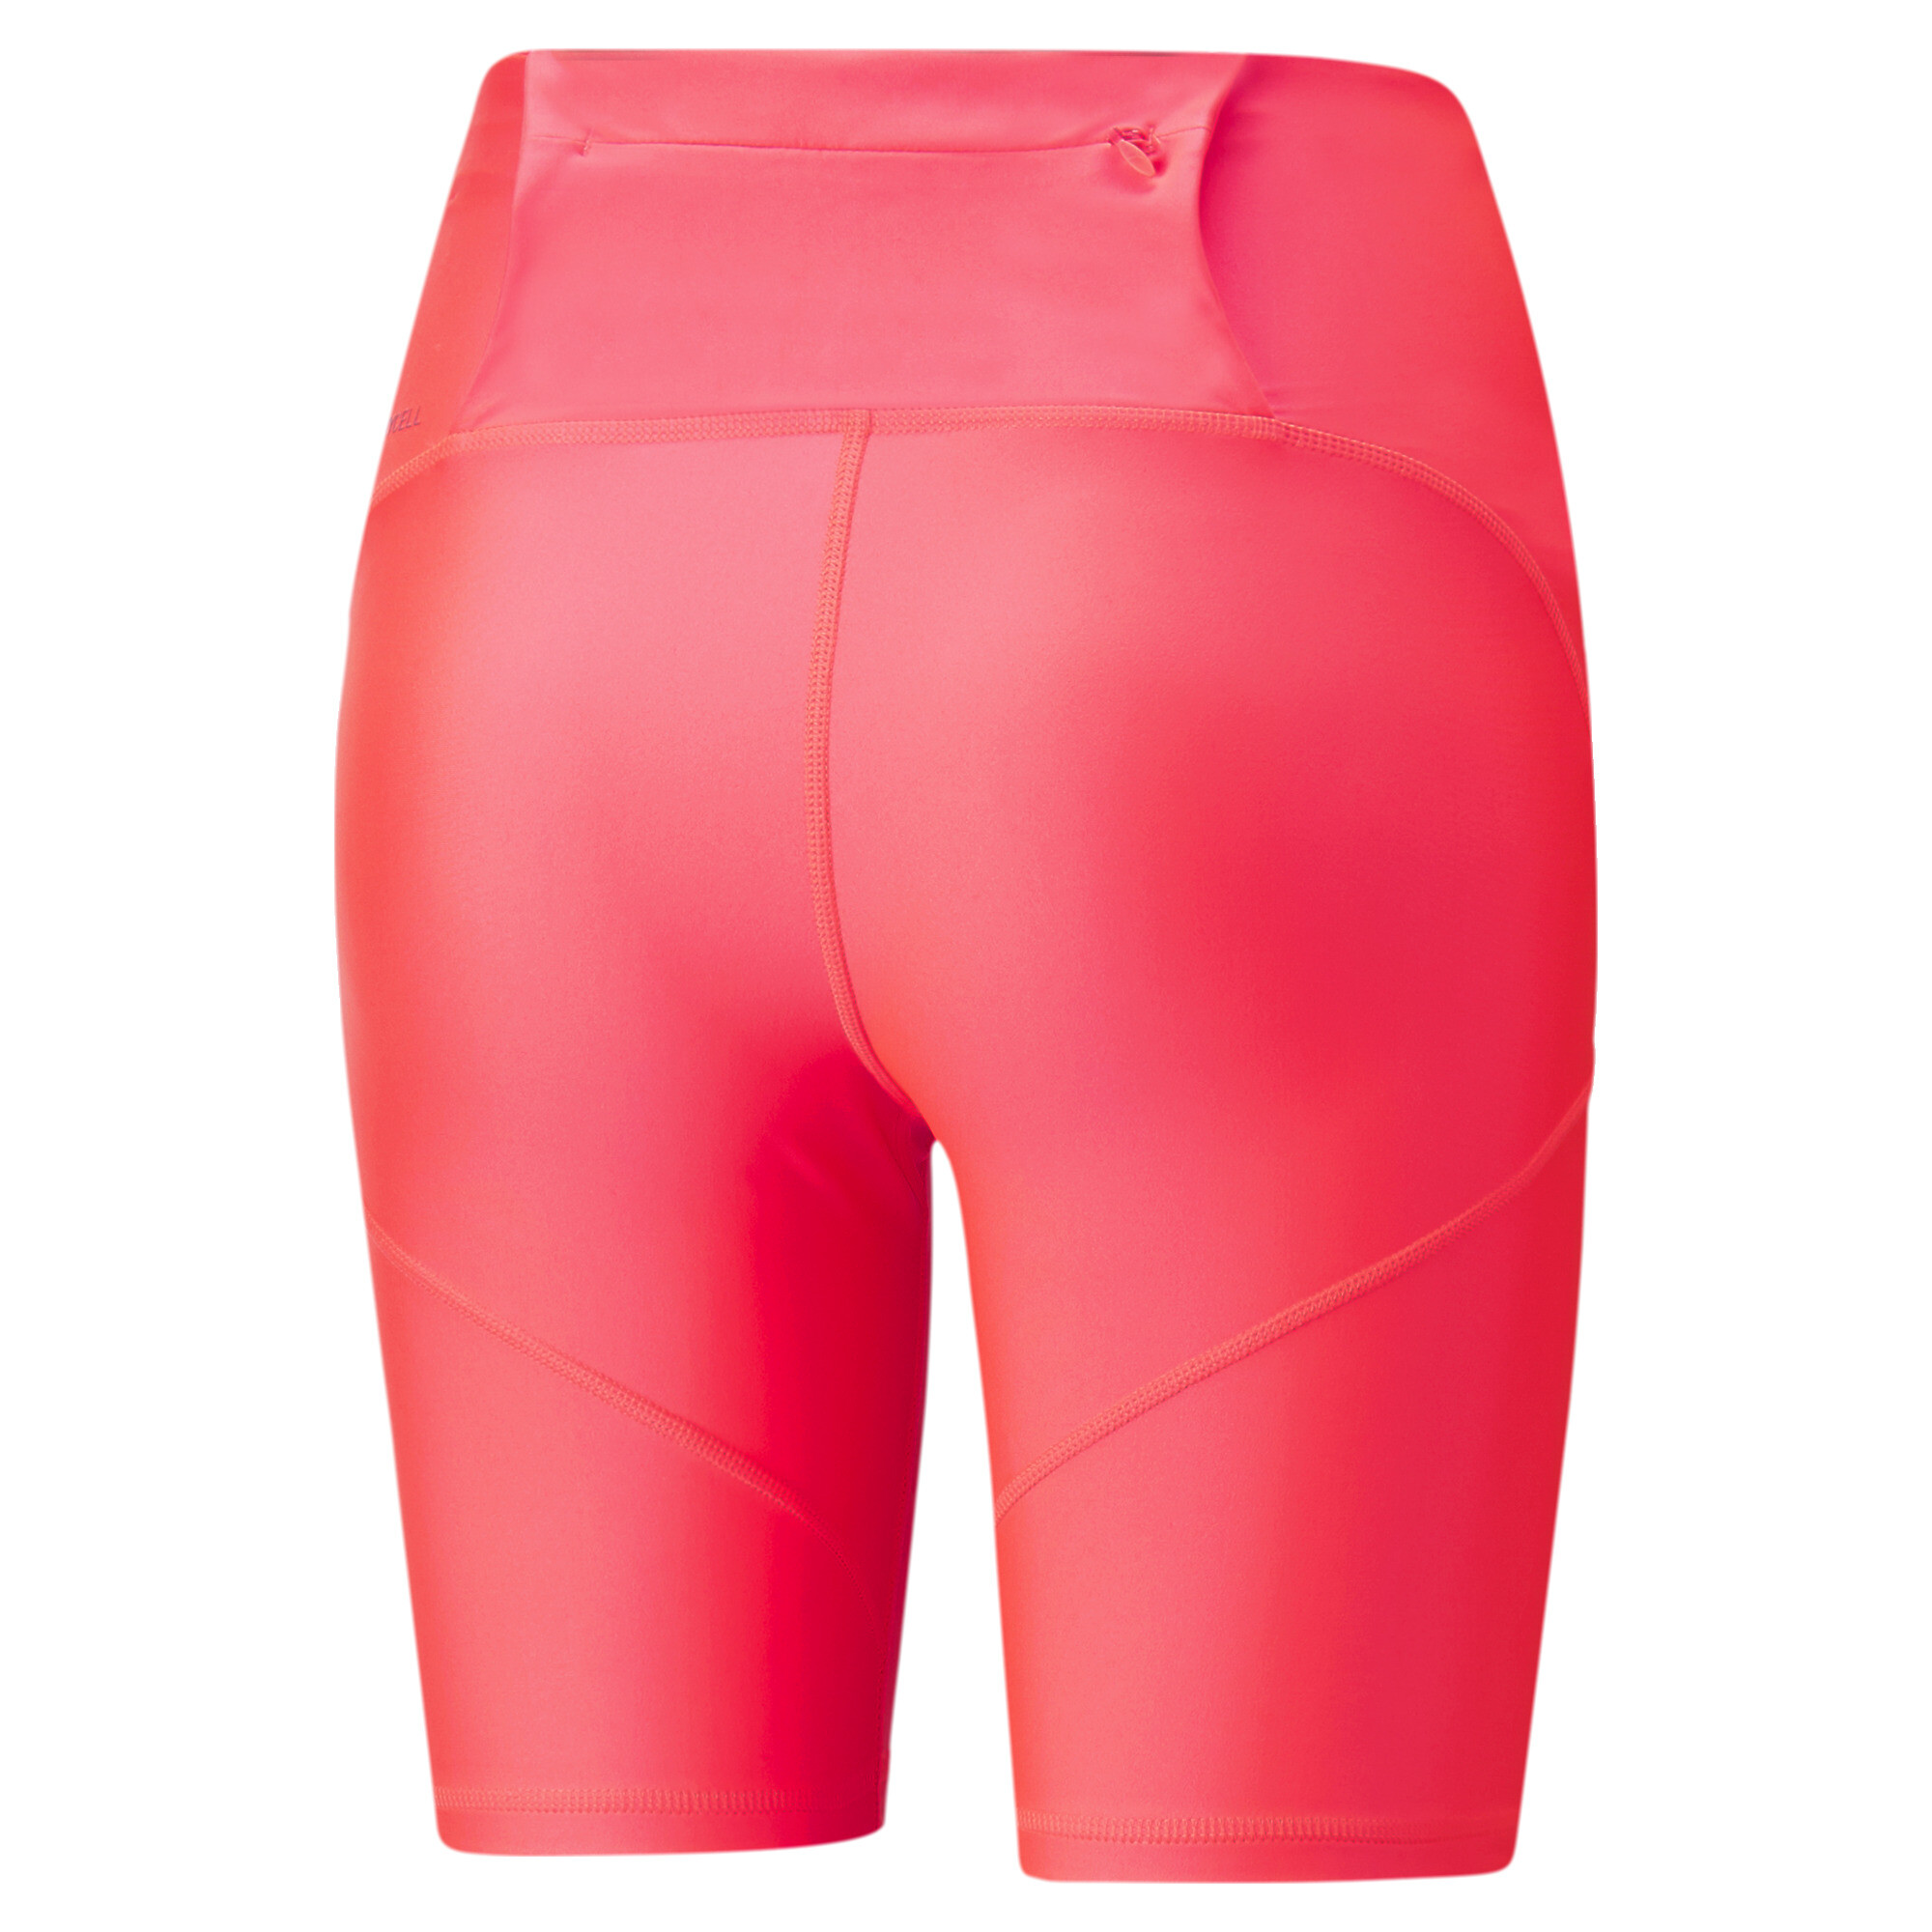 Women's PUMA ULTRAFORM Tight Running Shorts Women In Pink, Size Large